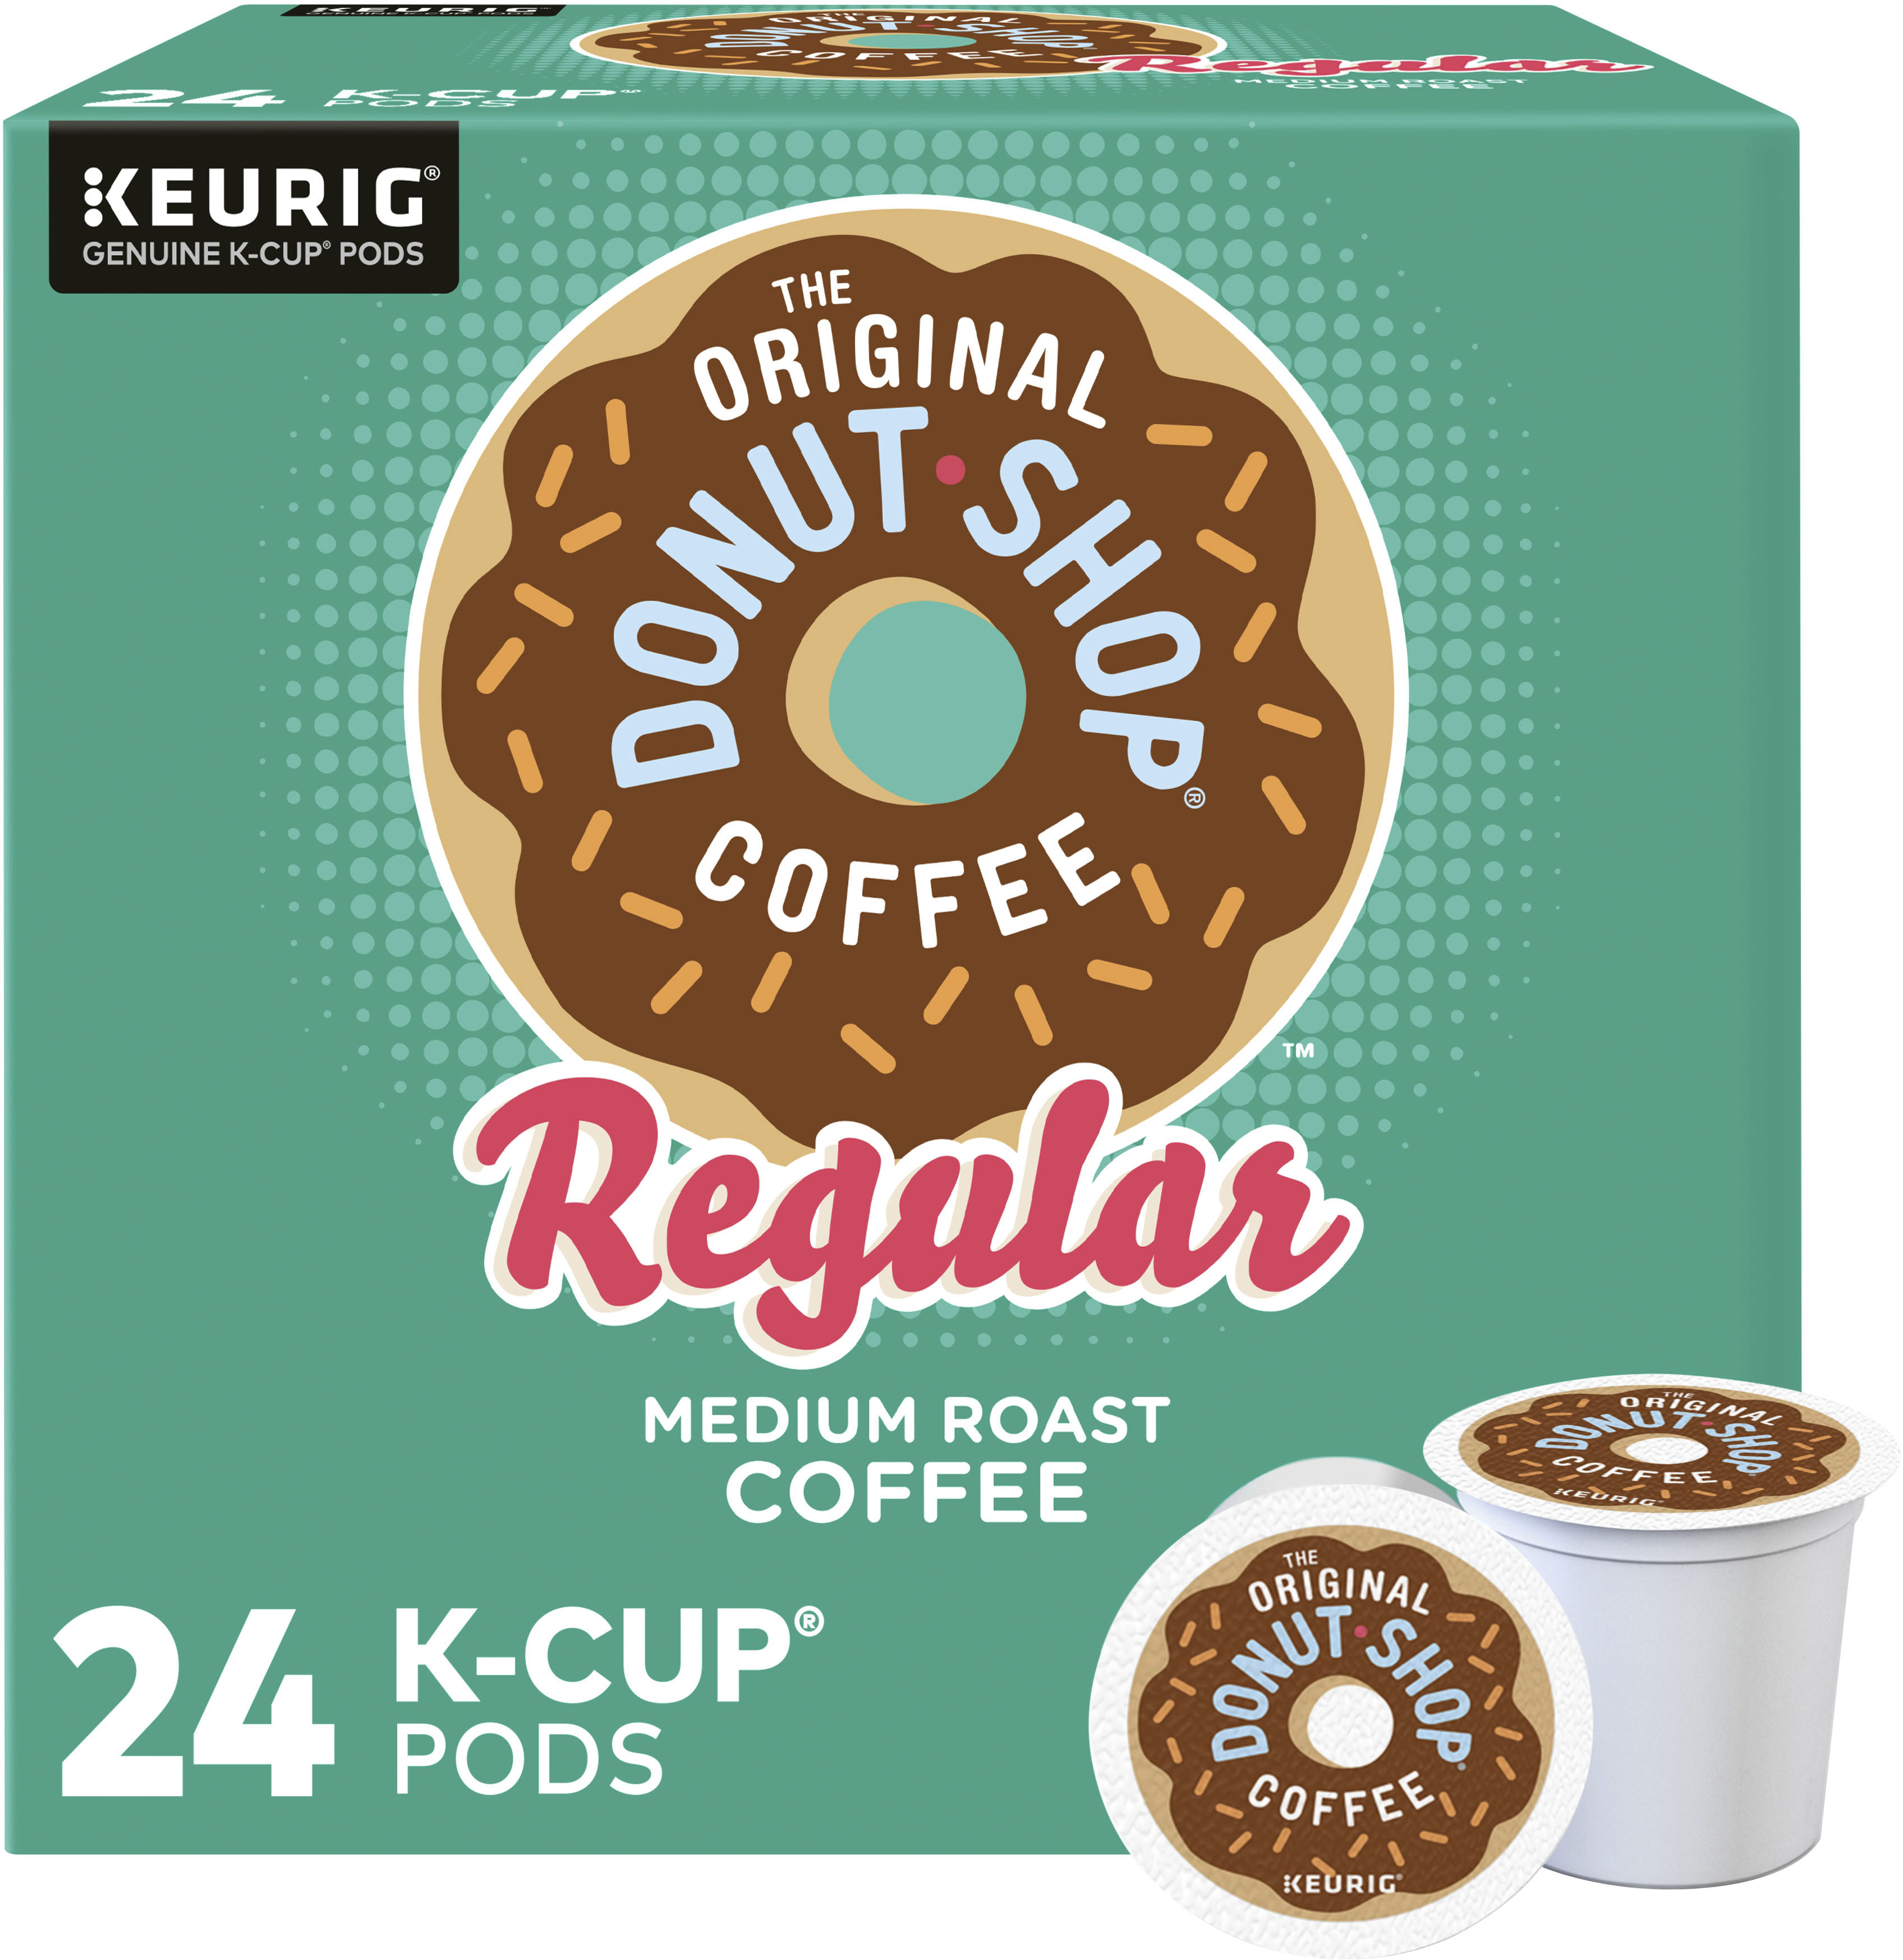 The Original Donut Shop - Regular Keurig Single-Serve K-Cup Pods, Medium Roast Coffee, 24 Count